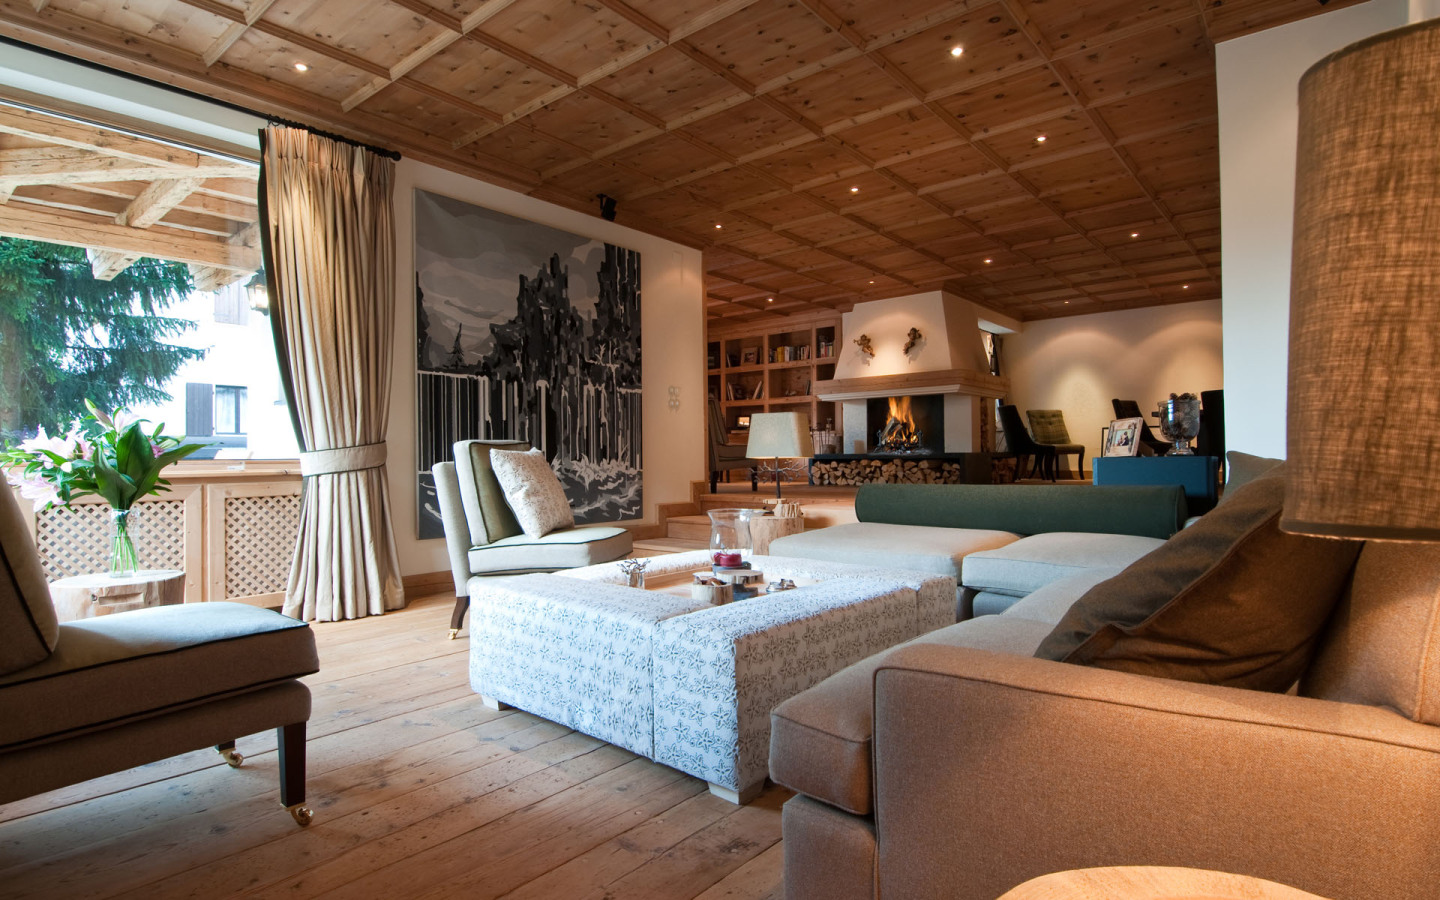 Maria Schnee Luxury 7 bedroom Chalet St Anton Austria